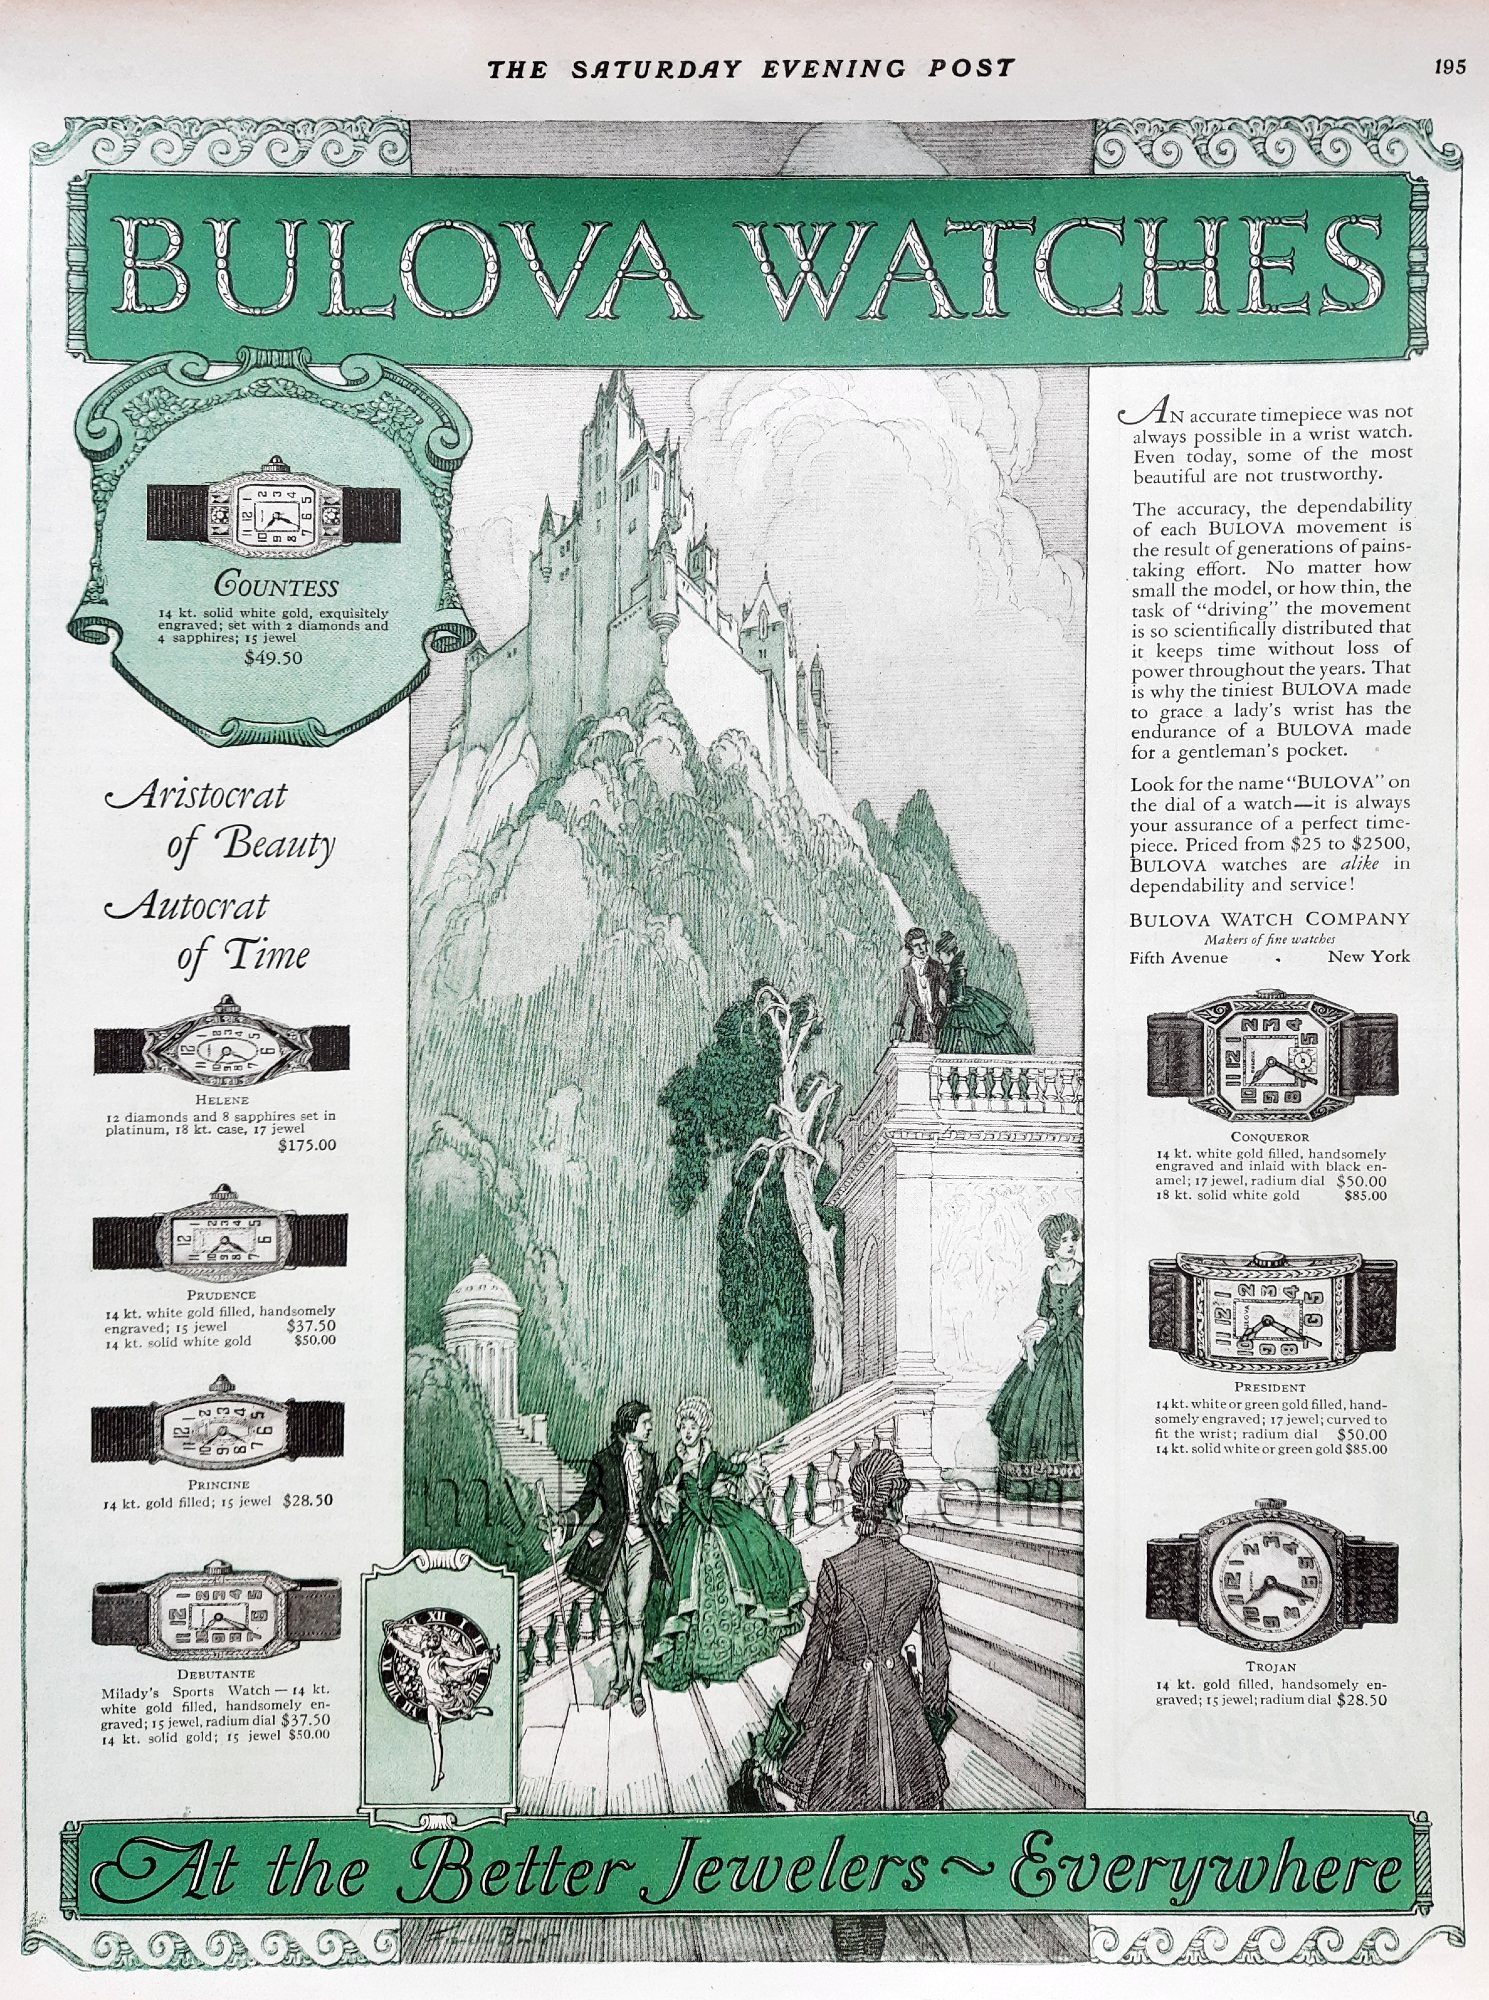 1926 Bulova advert featuring the Conqueror and Trojan